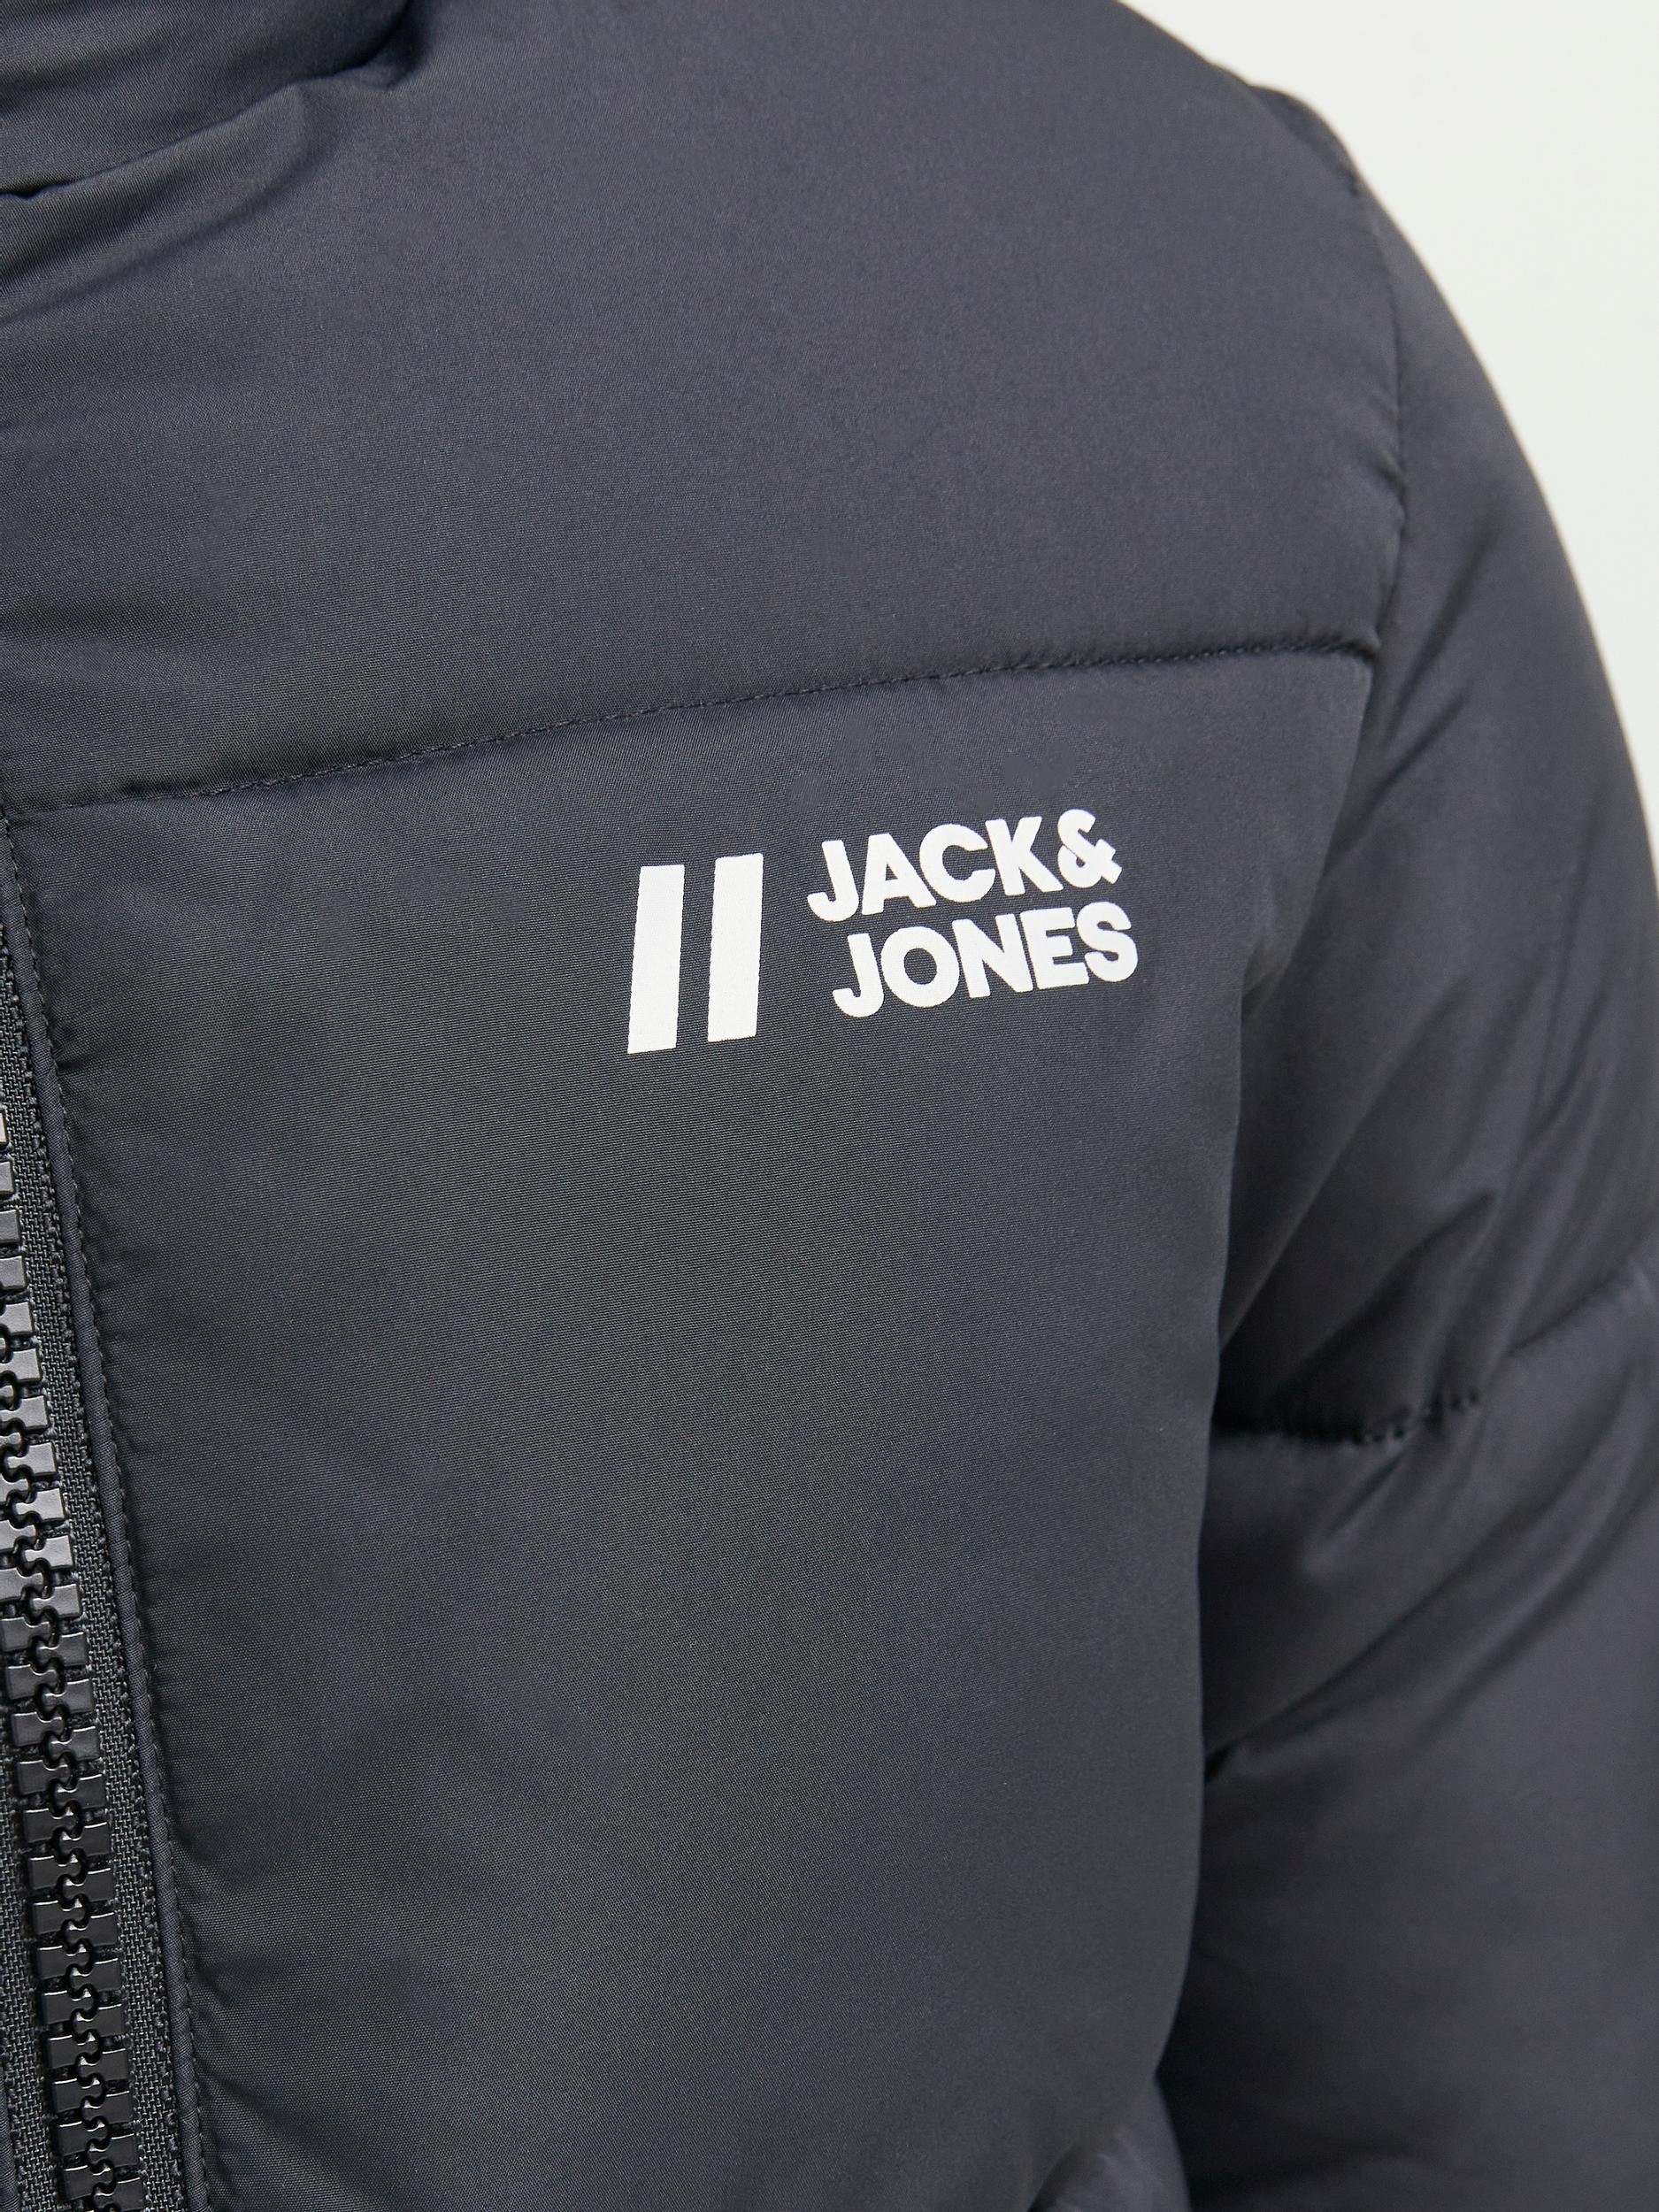 & Jones Steppjacke Junior Black Jack